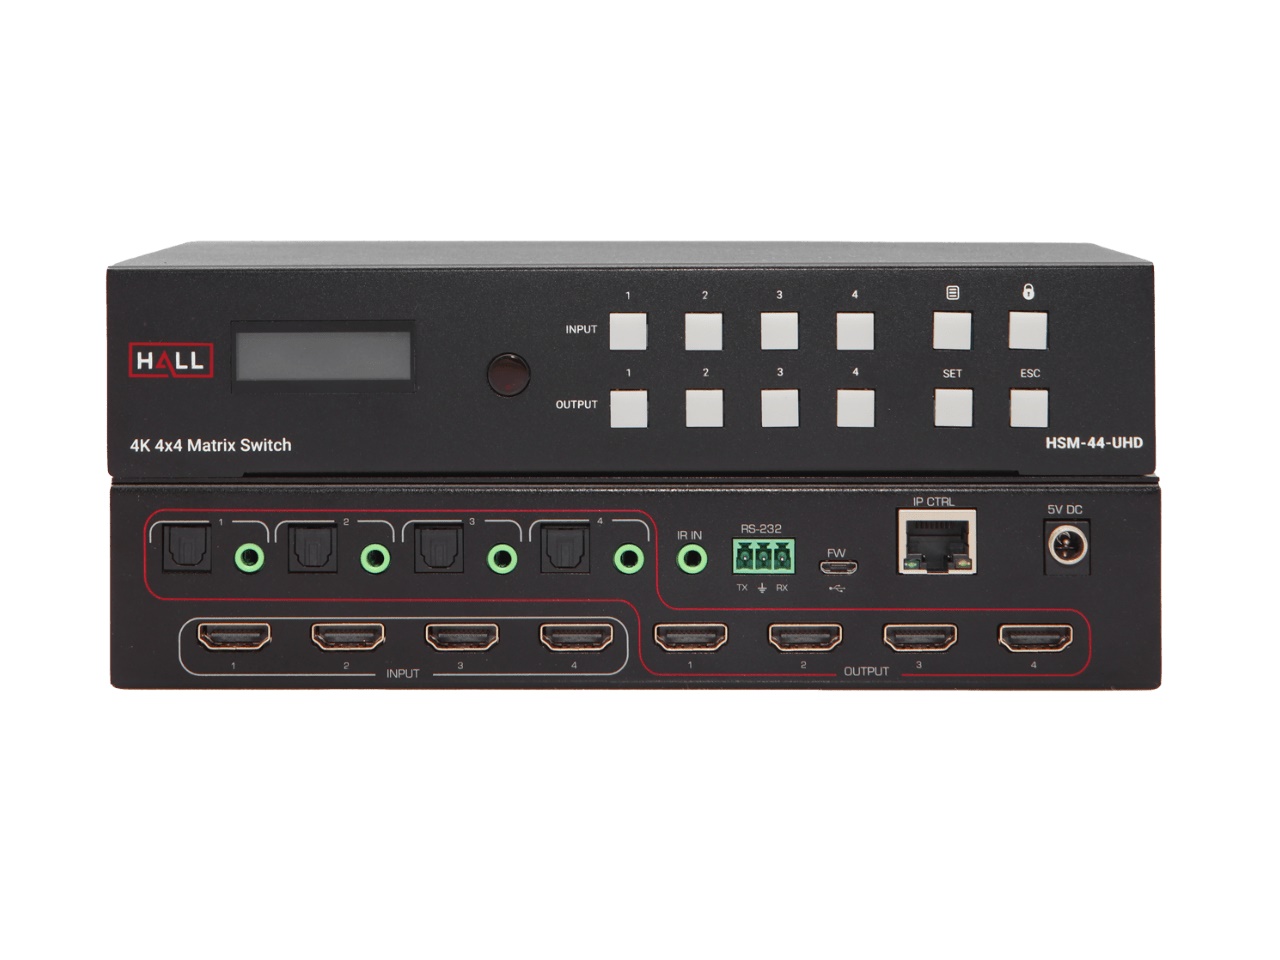 HSM-44-UHD 4x4 Matrix Video Switcher by Hall Technologies